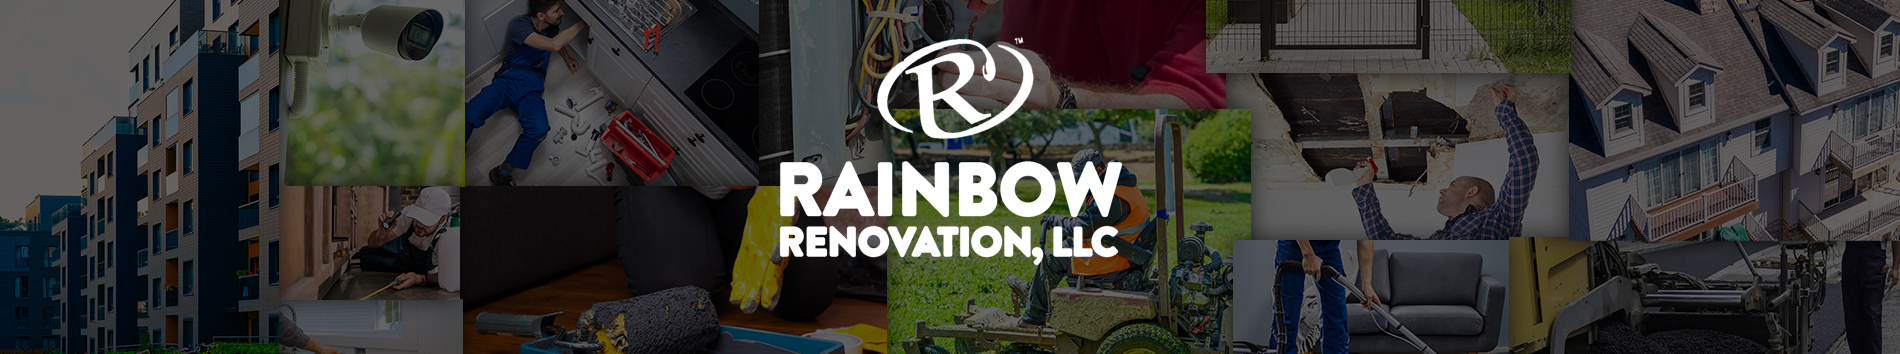 Rainbow Renovation, LLC